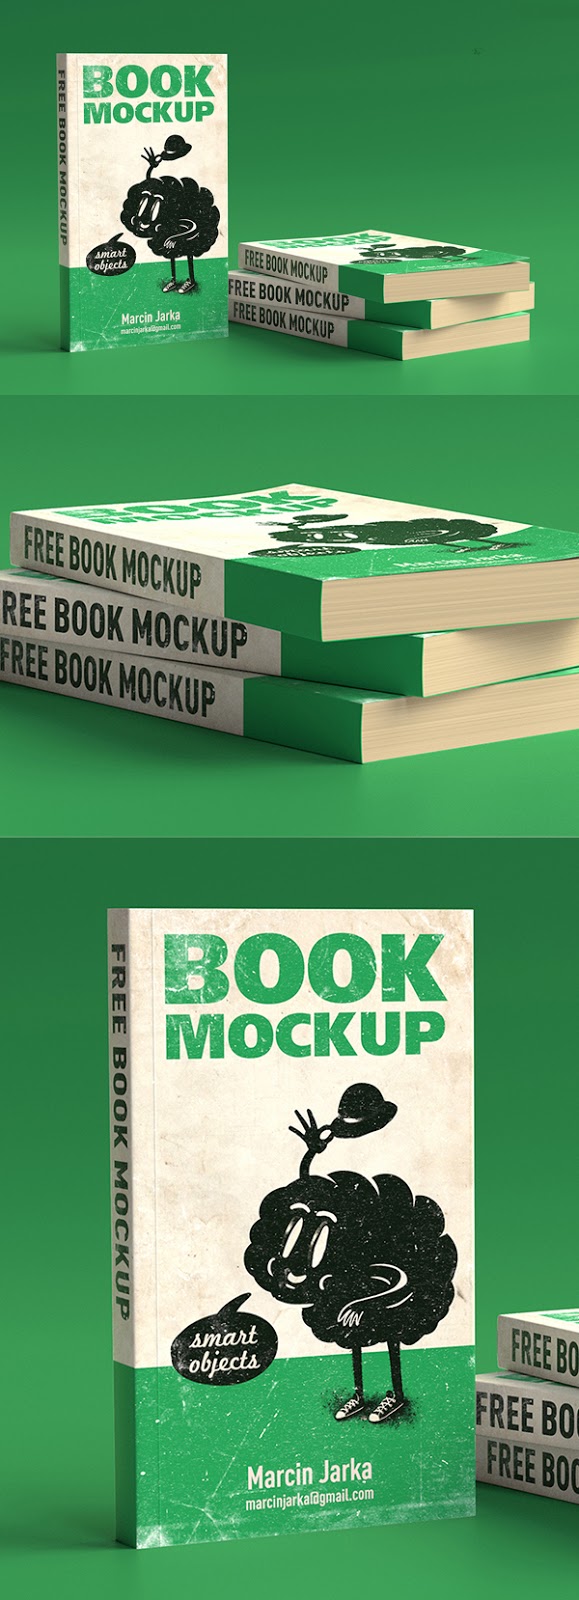 Download Free Mockup PSD 2018 - Free Book Mockup PSD Templates